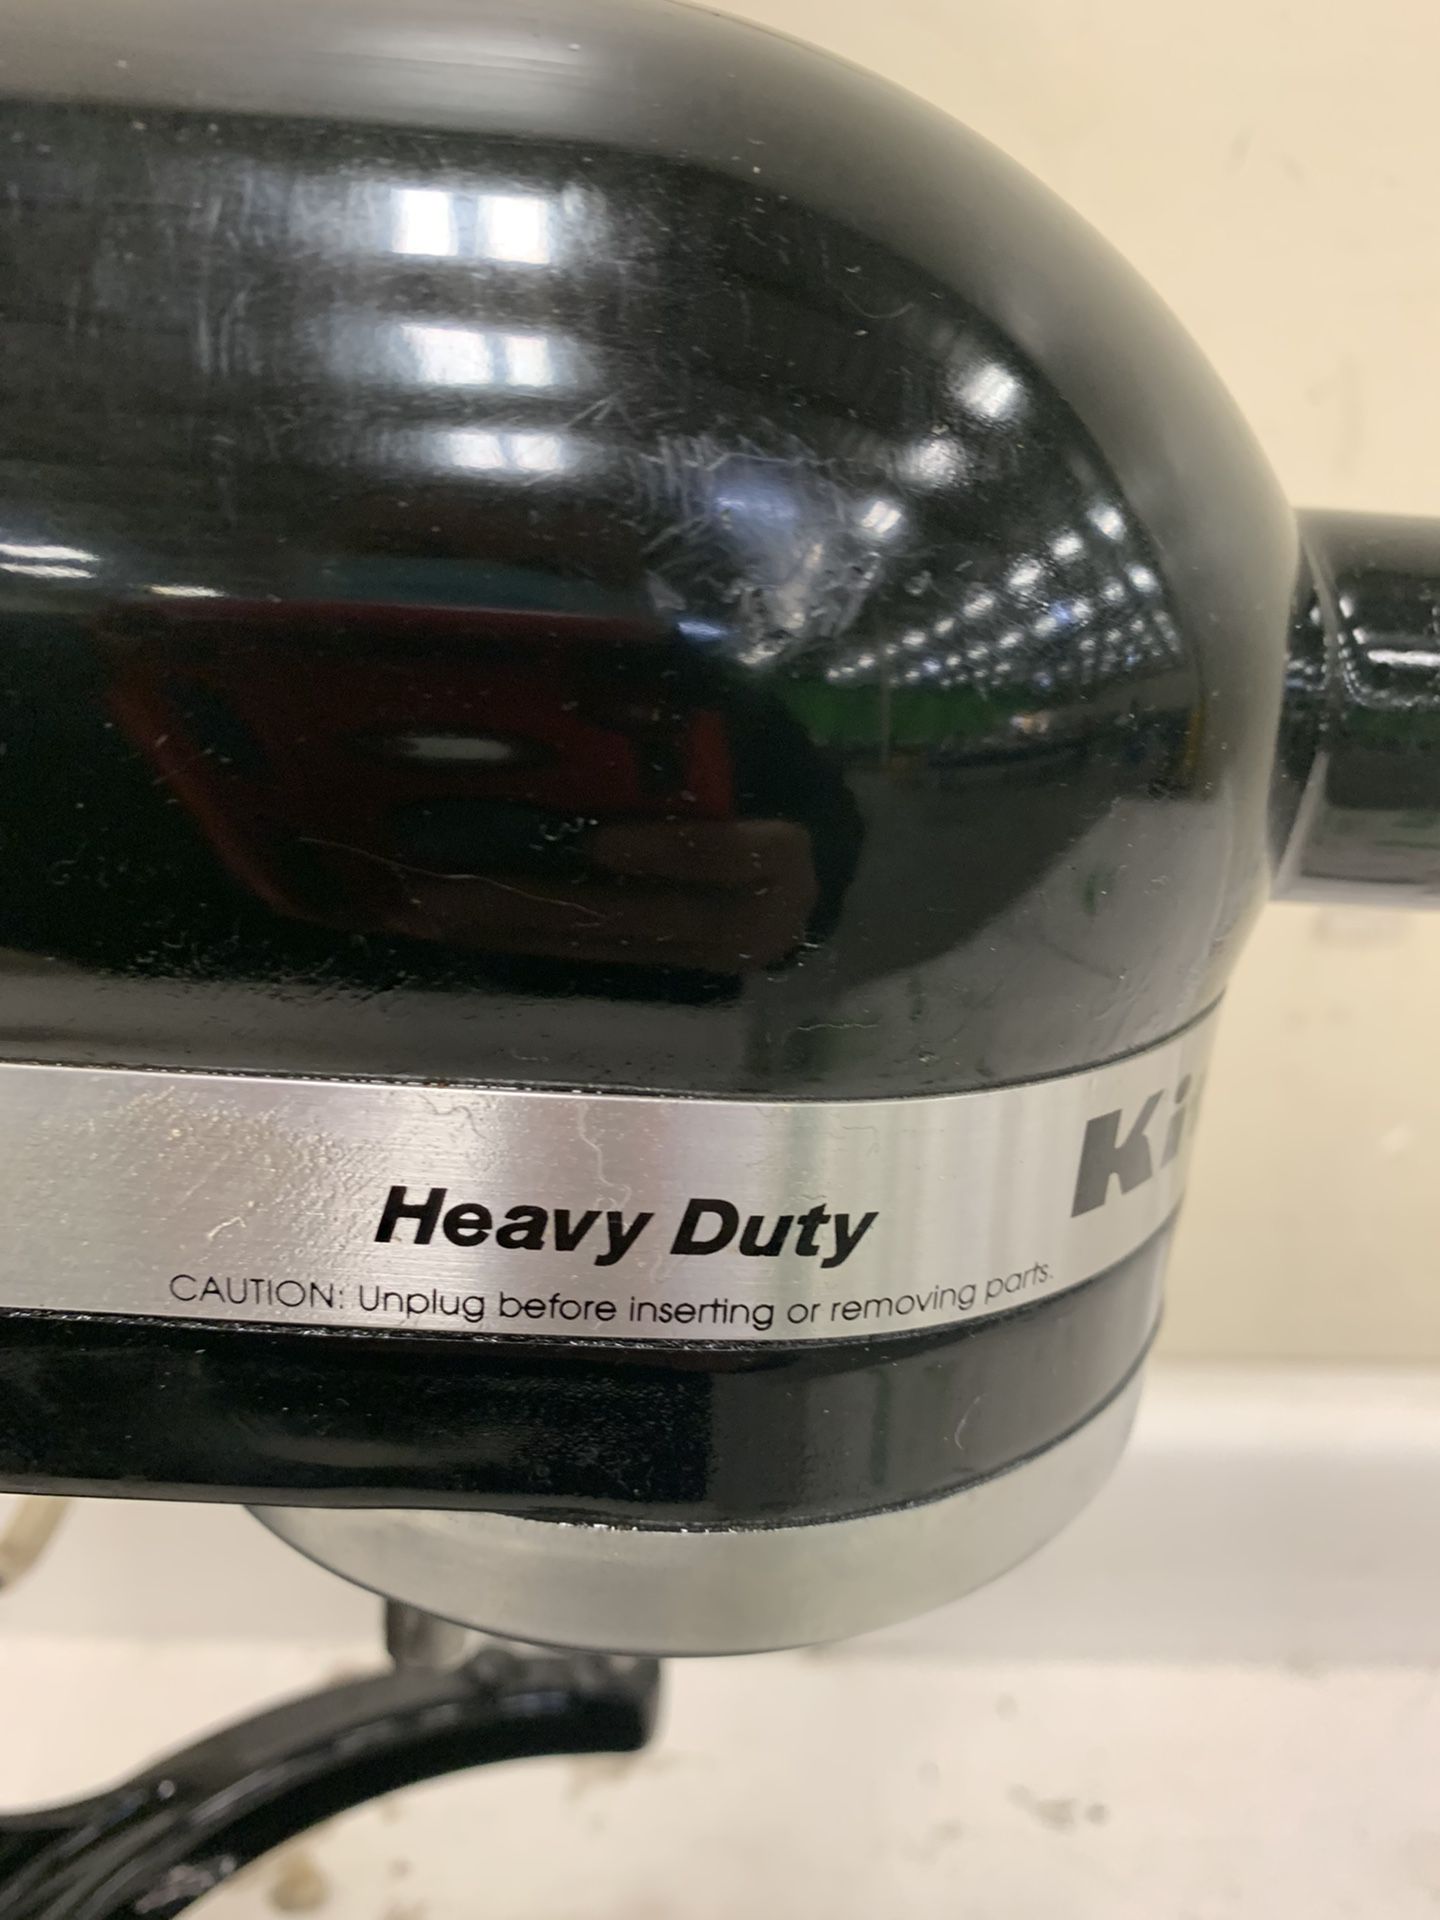 KitchenAid Heavy Duty Mixer & Attachments for Sale in Peoria, AZ - OfferUp